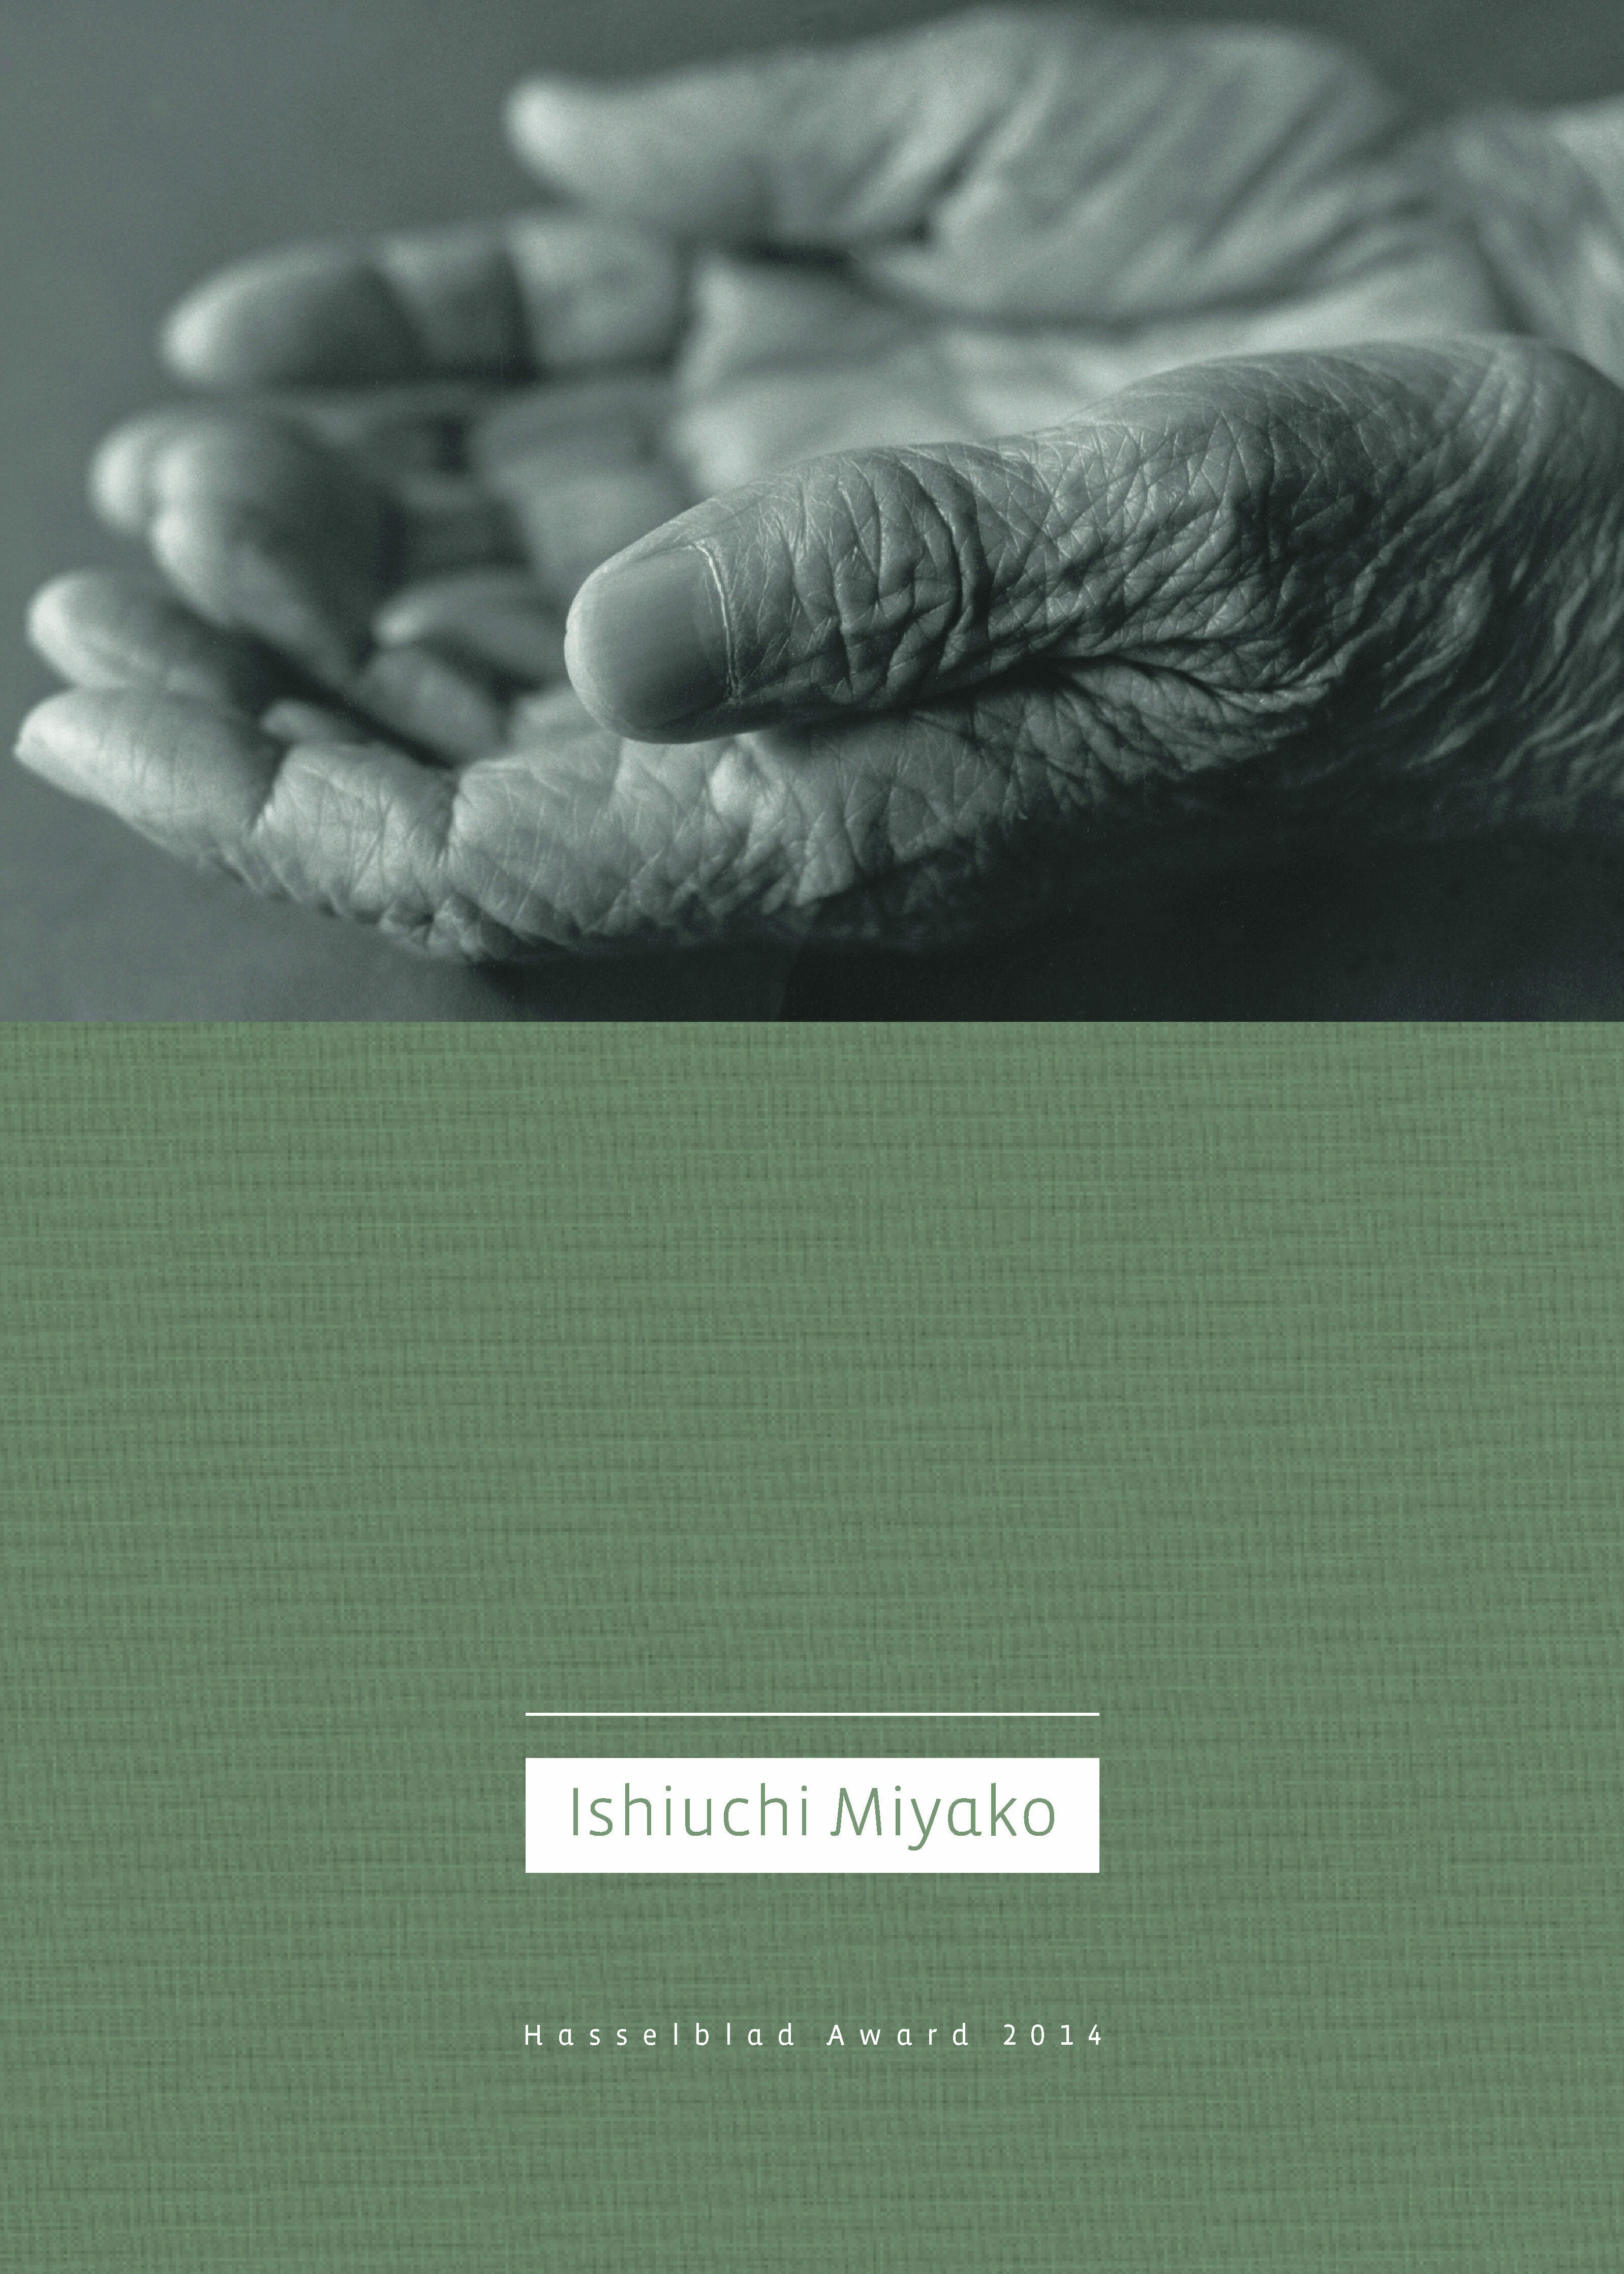 miyako ishiuchi hasselblad award 2014, dragana vujanovic, louise wolthers, kunstbuch bildband fotobuch